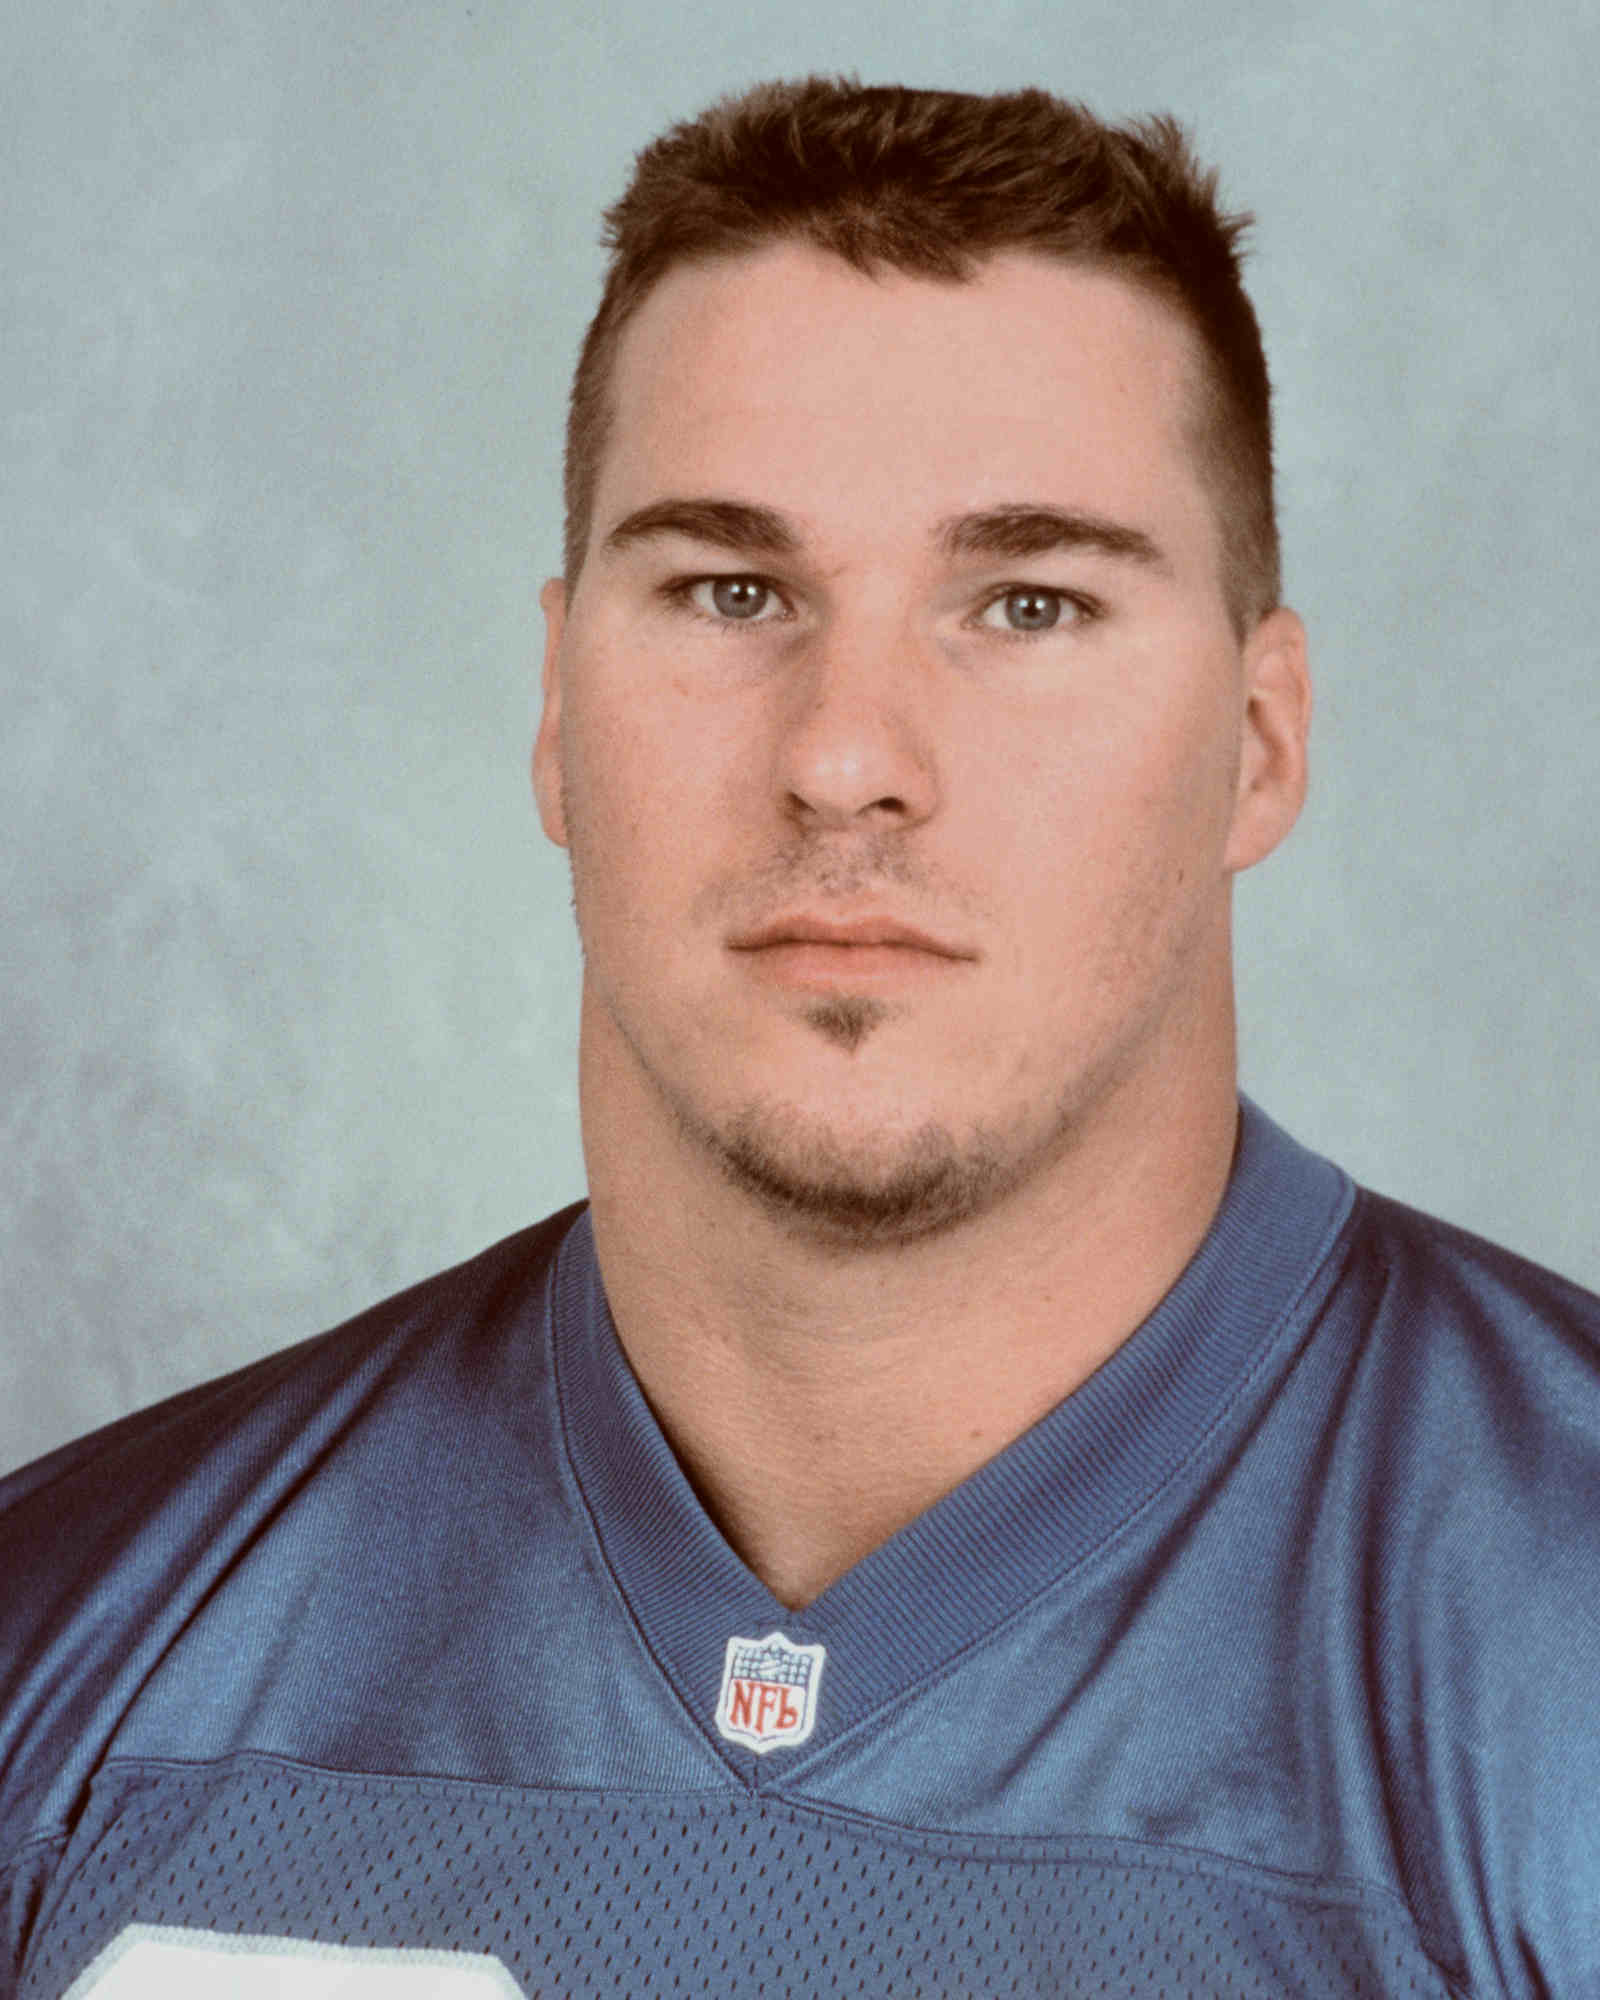 Tony Semple, NFL Player